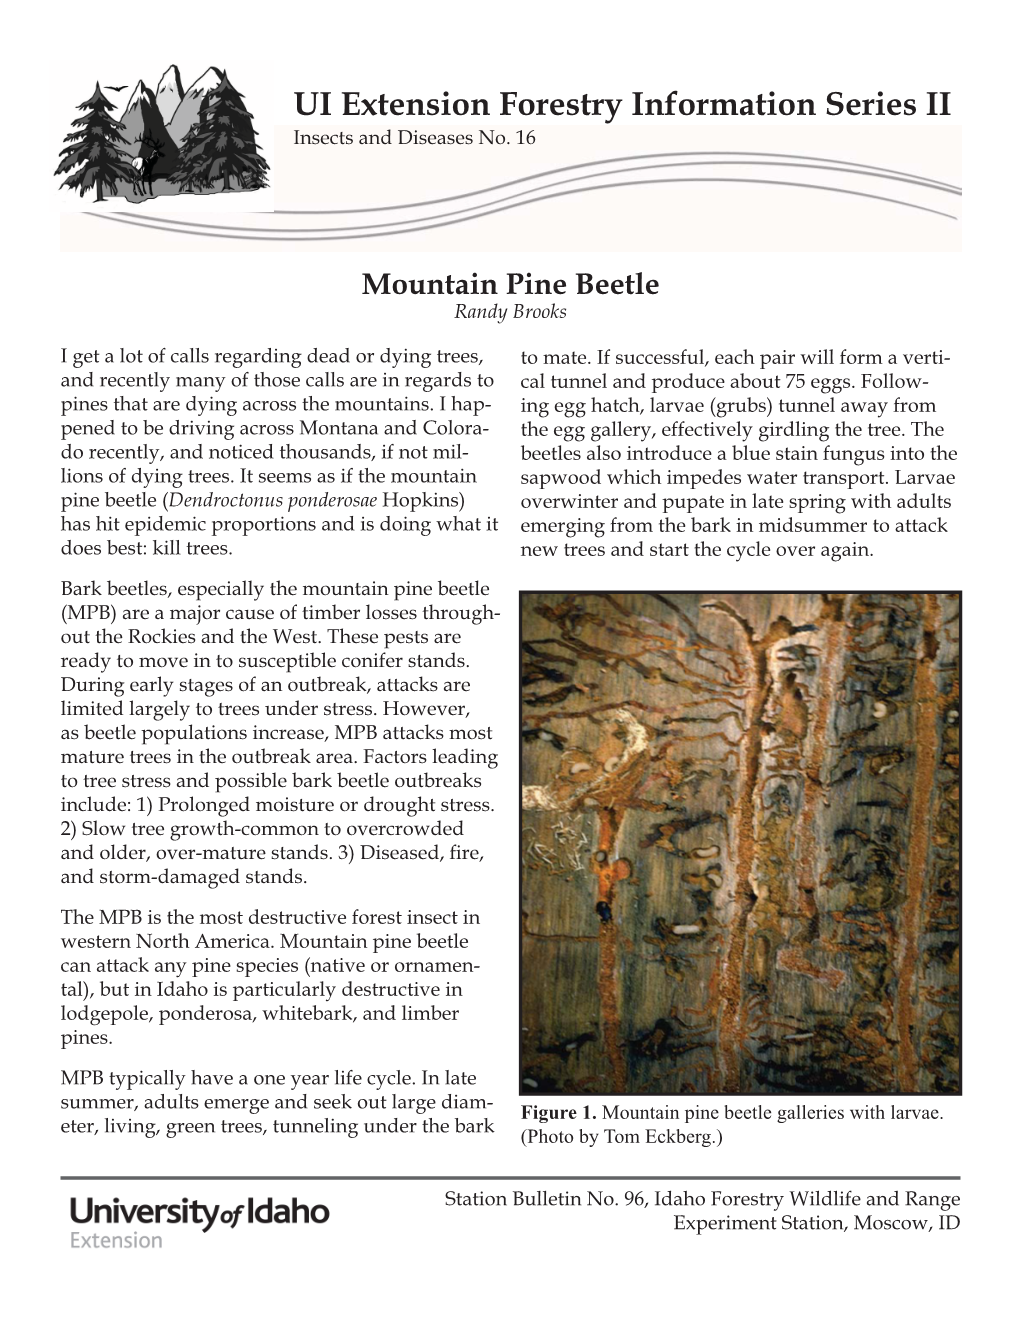 Mountain Pine Beetle (PDF)